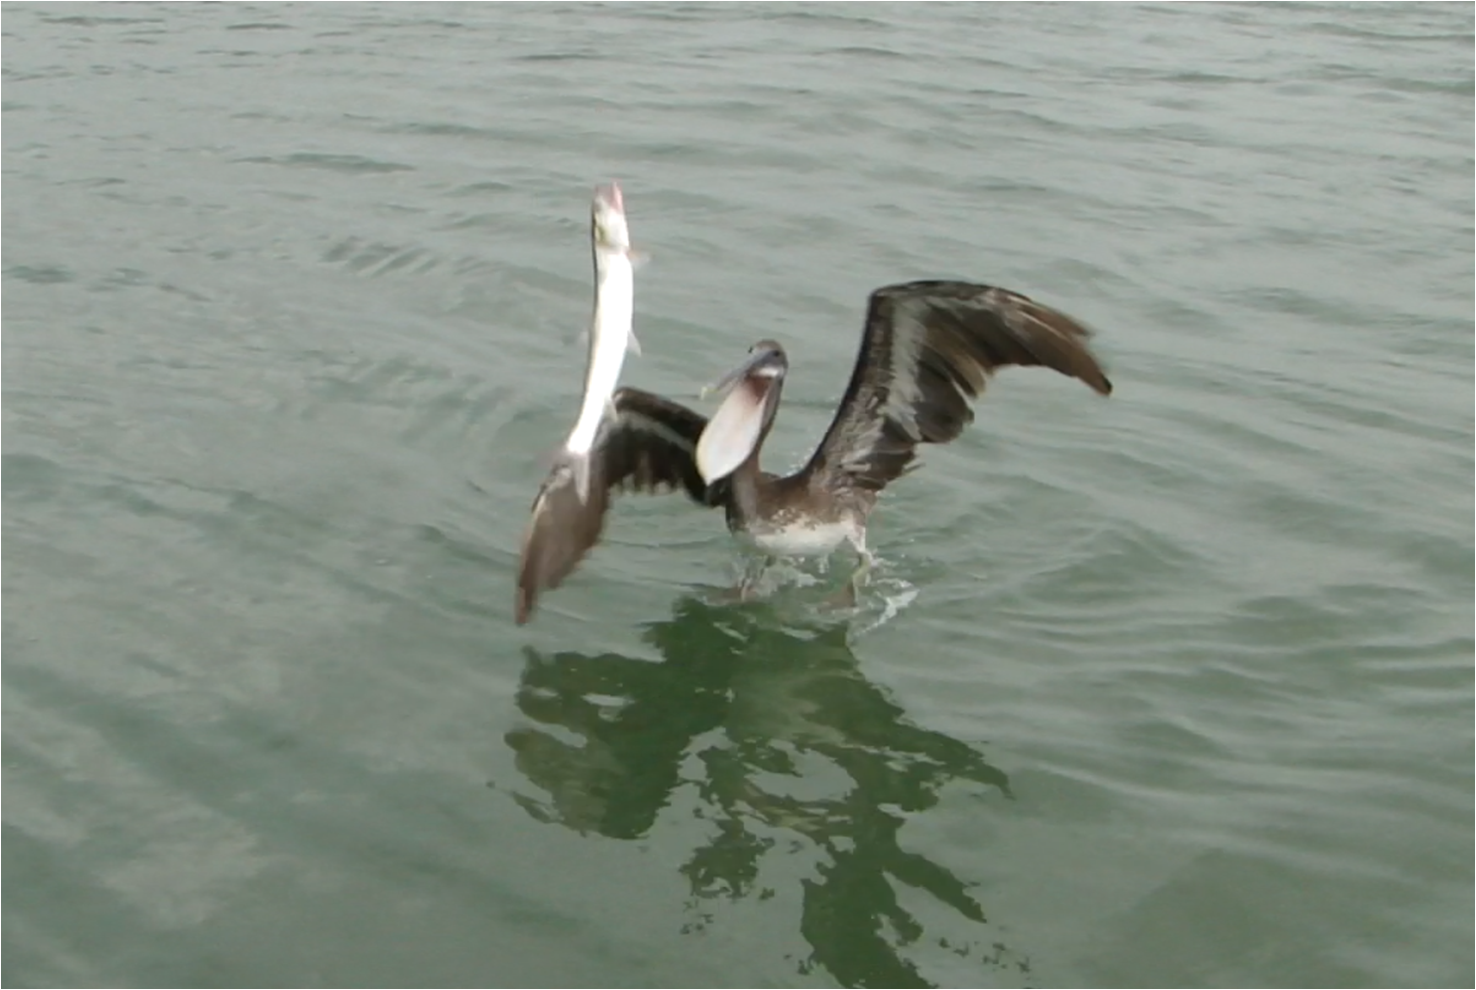 Pelican catching fish